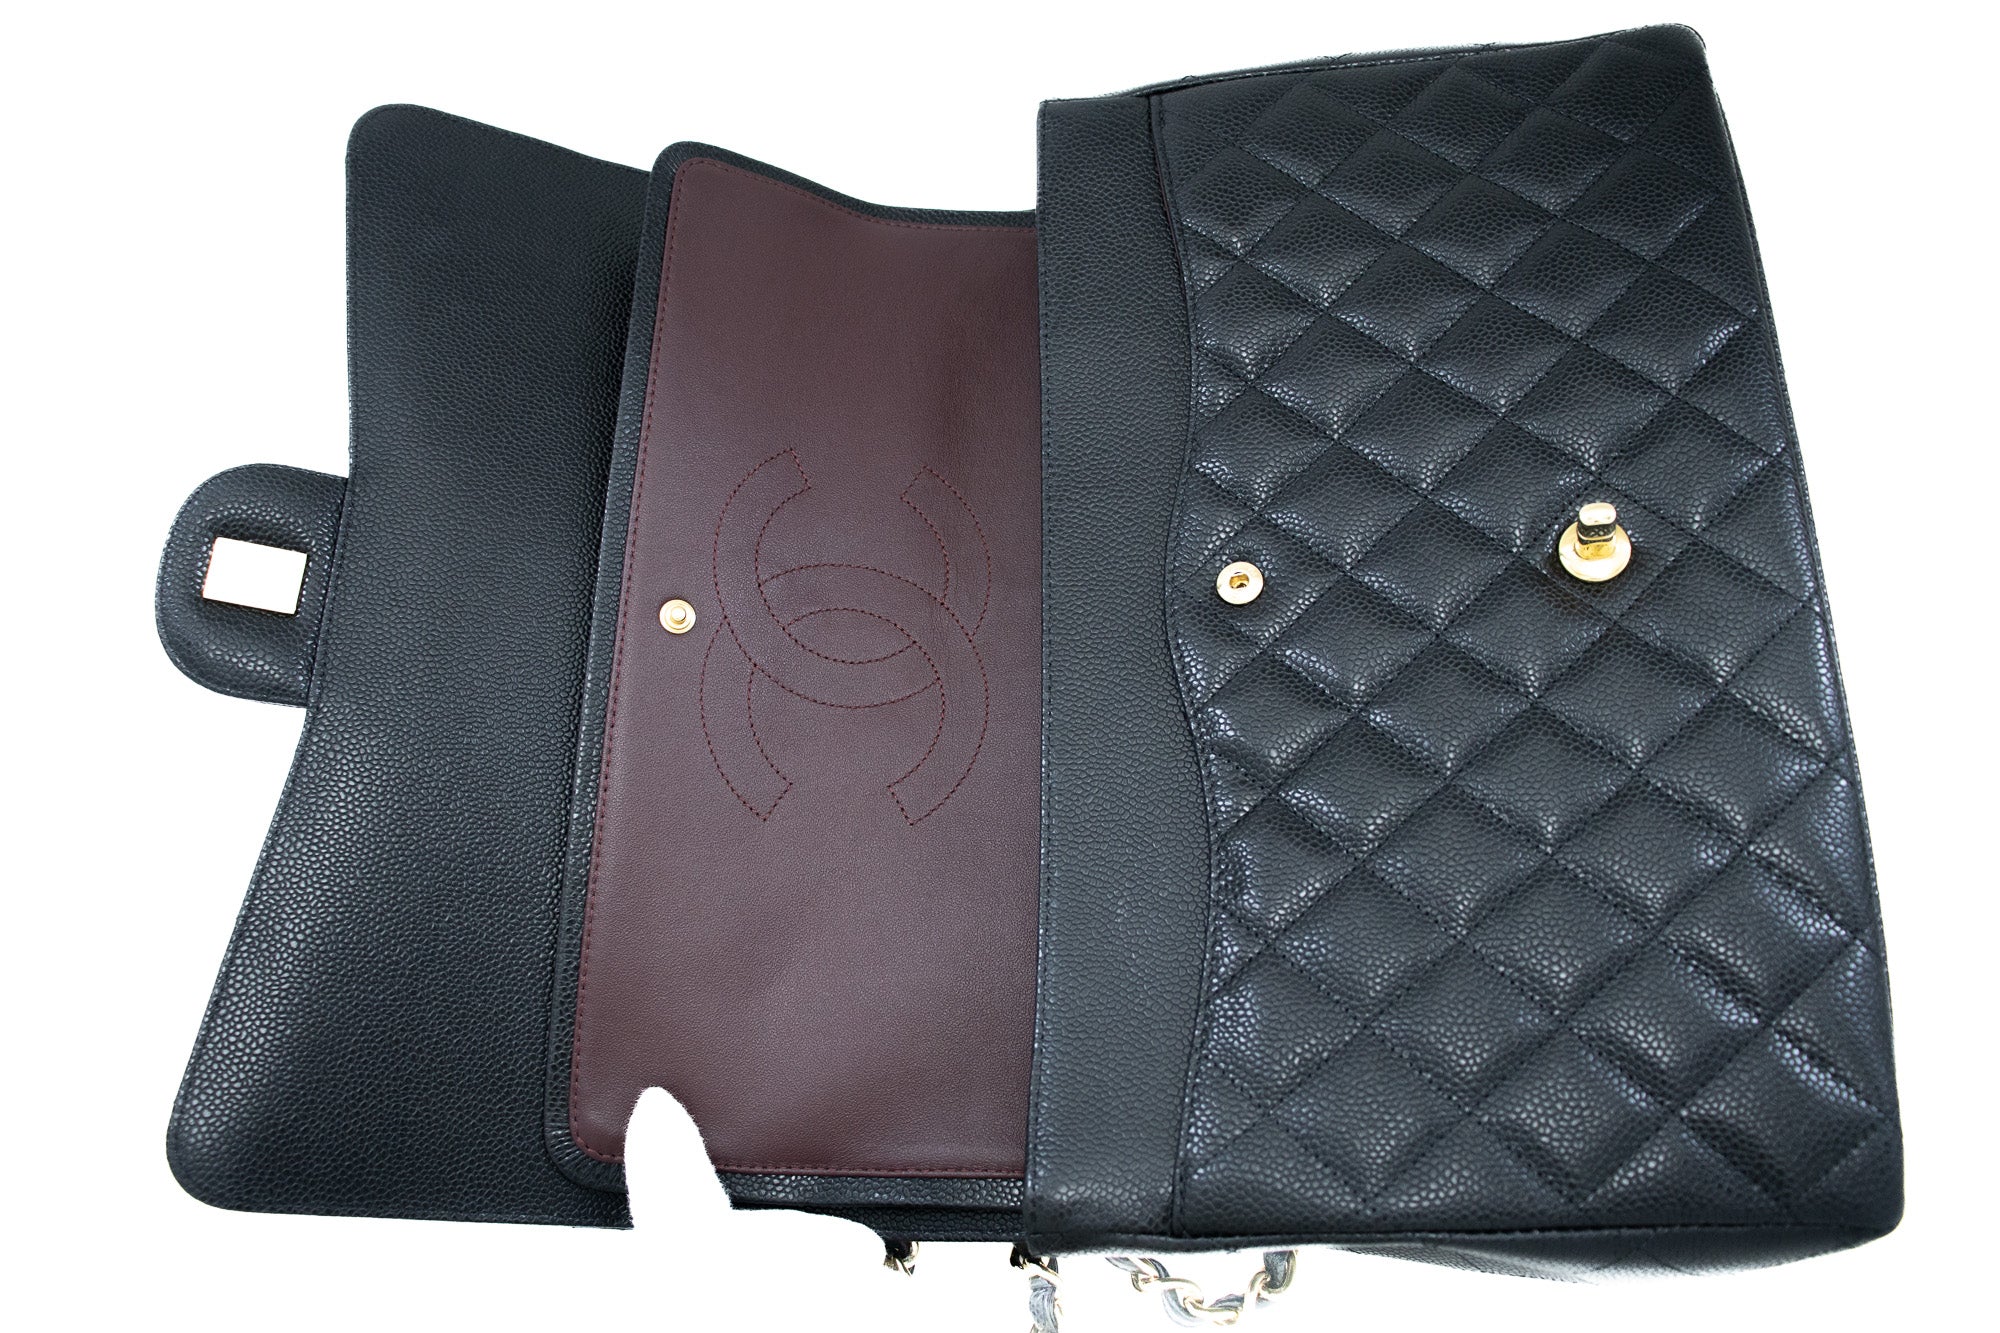 Chanel Jumbo bag Black Grained Calfskin Sylver Hardware